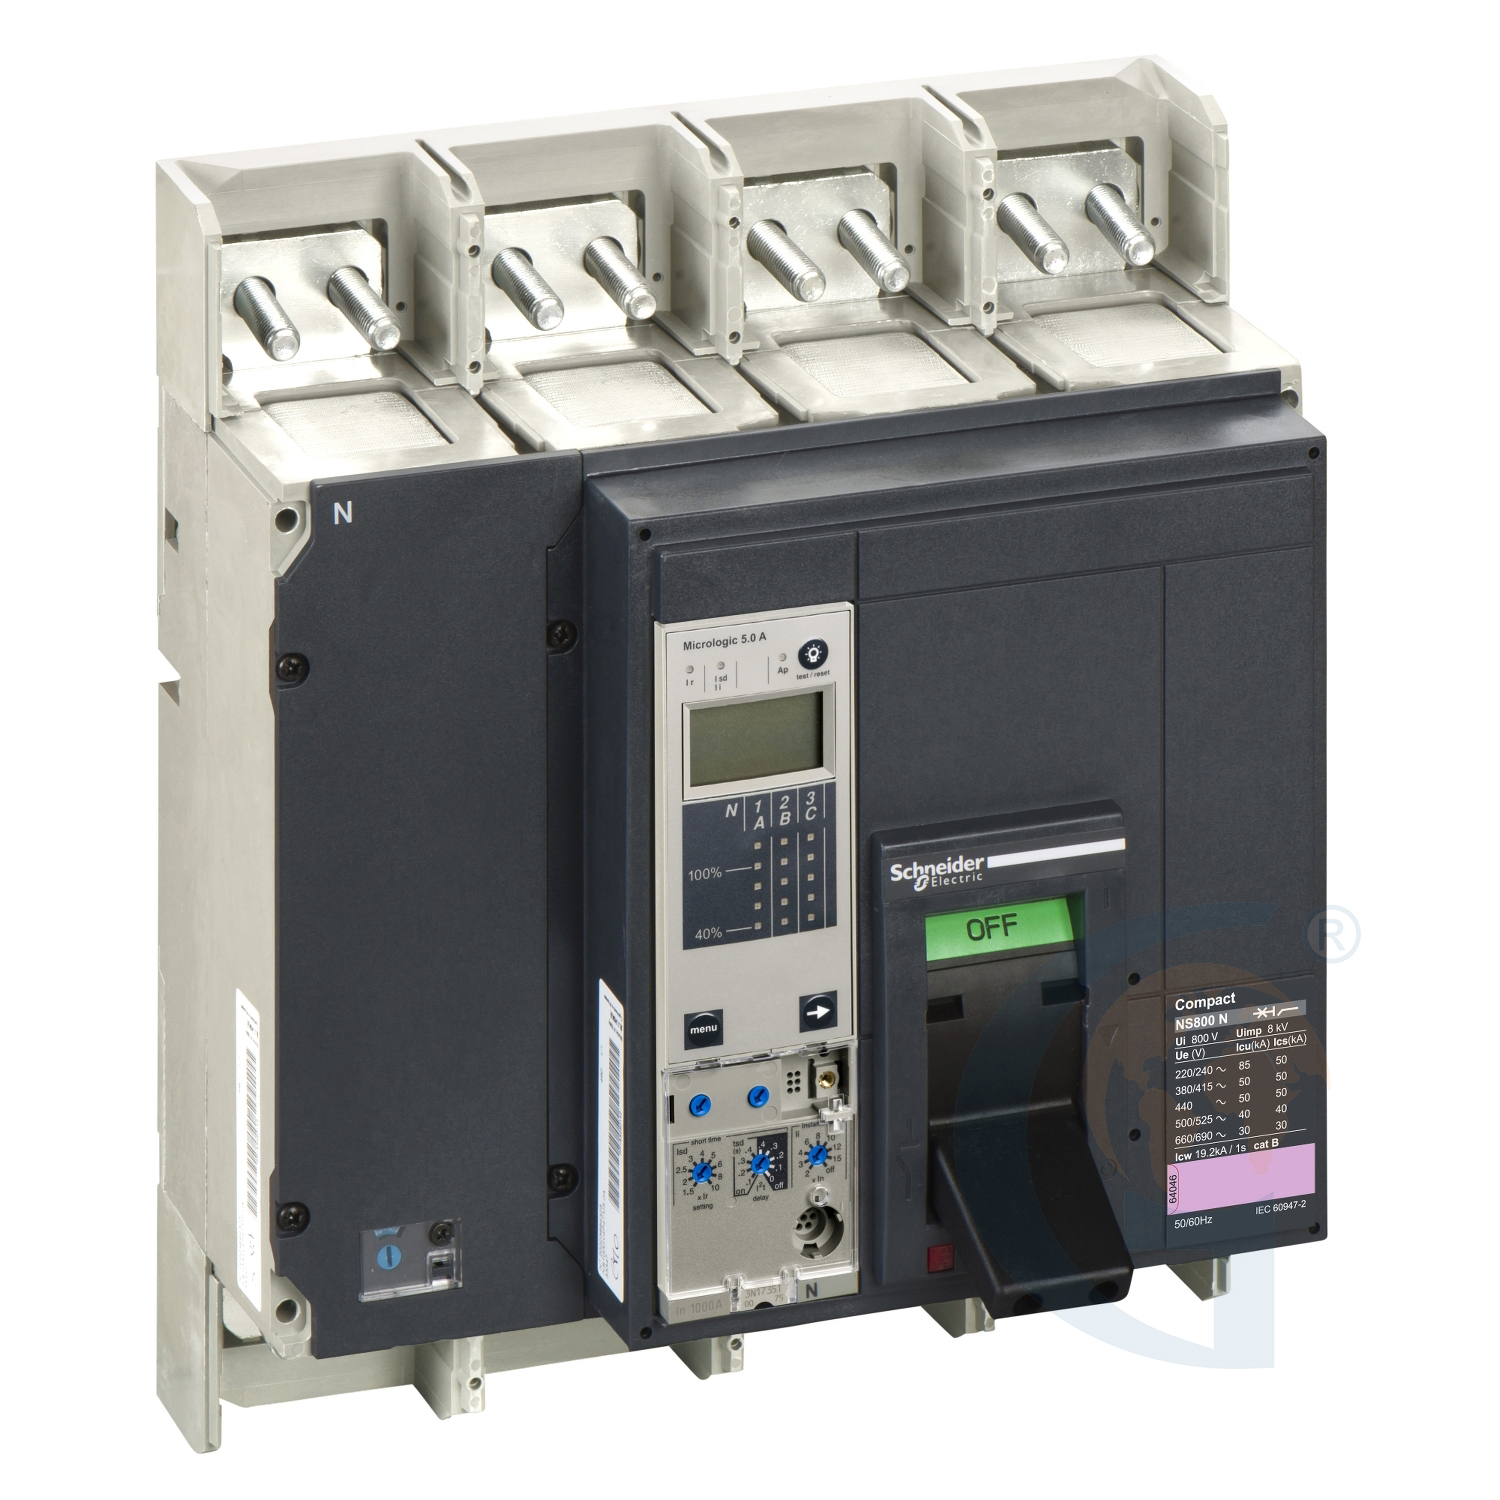 Schneider Electric 34426 circuit breaker Compact NS800N – Micrologic 5.0 E – 800 A – 4 poles 4t https://gesrepair.com/wp-content/uploads/2020/Schneider/Schneider_Electric_34426_.jpg